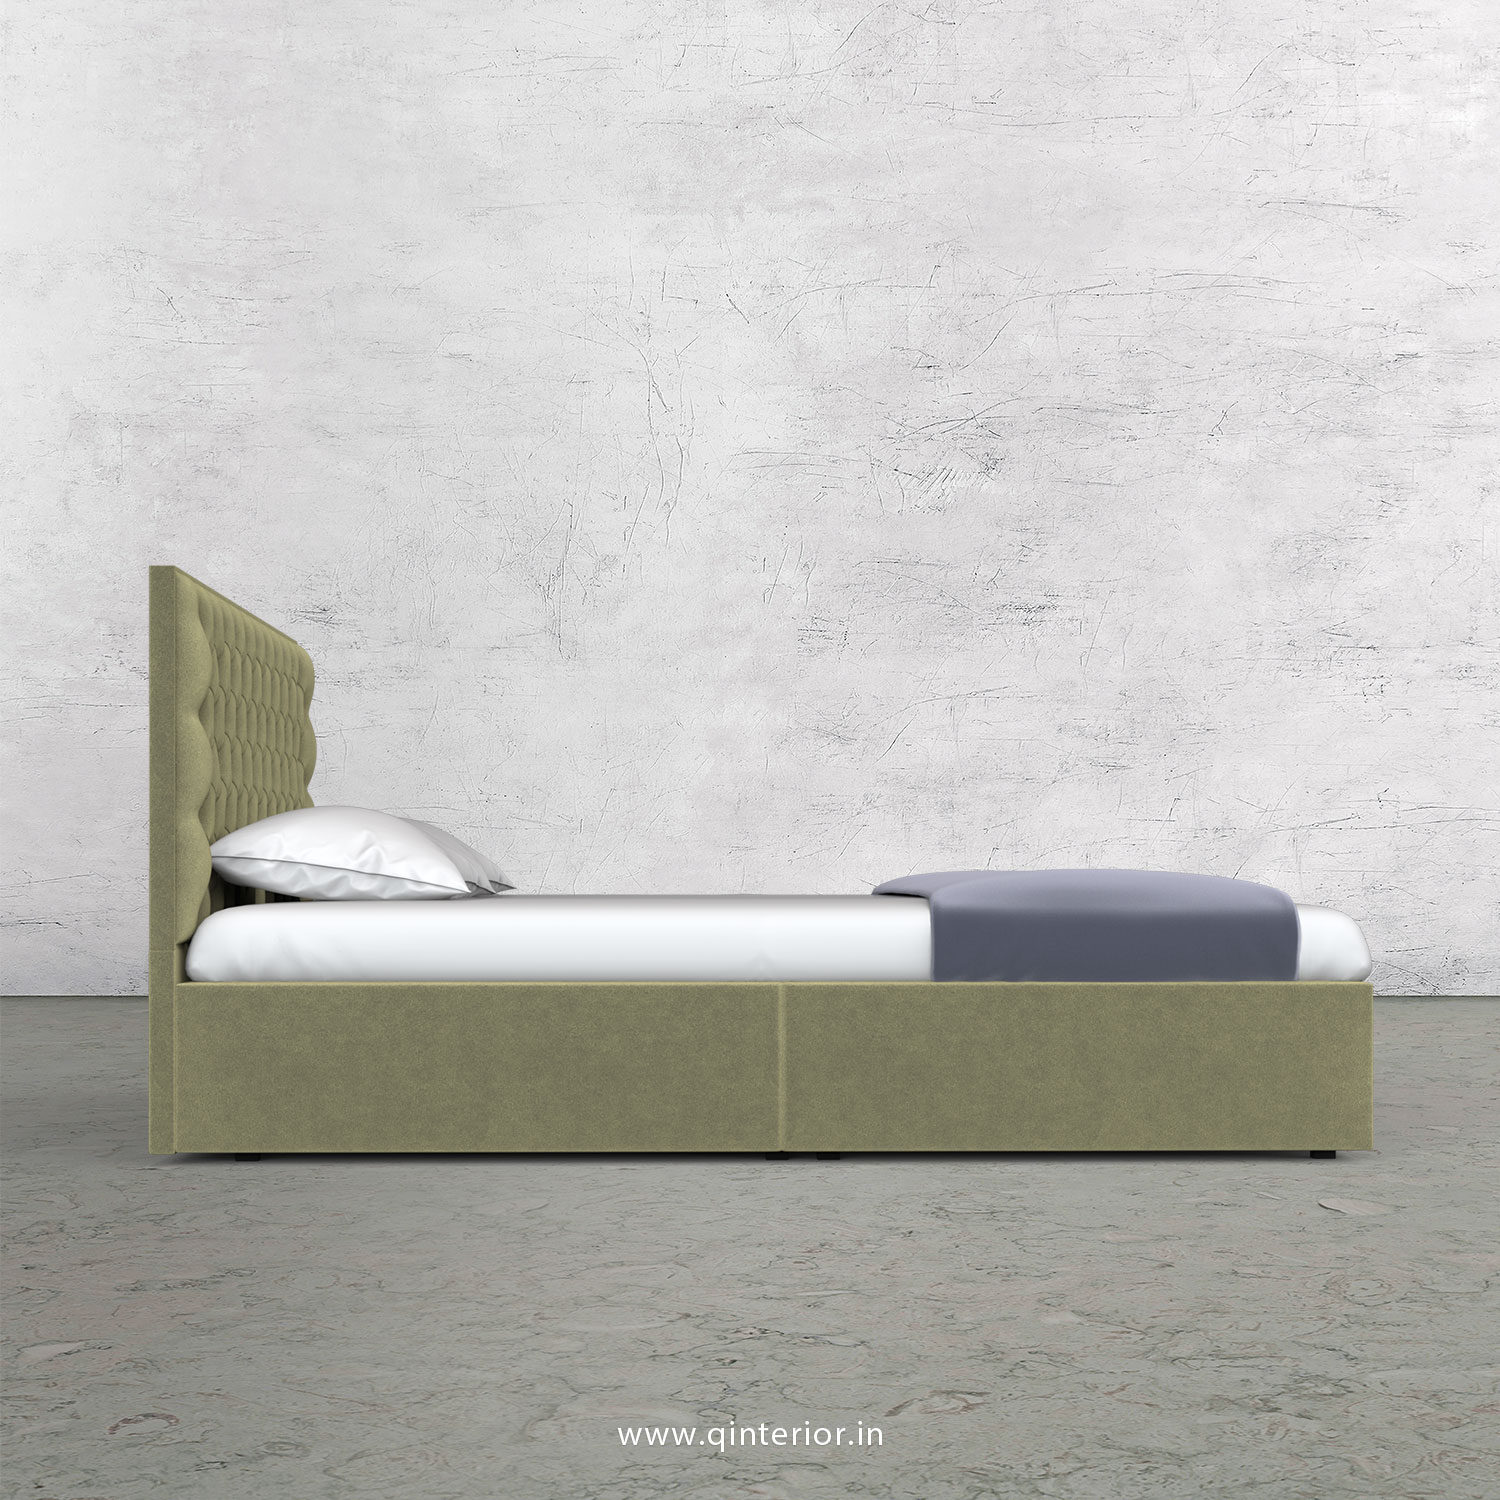 Orion King Size Storage Bed in Velvet Fabric - KBD001 VL04